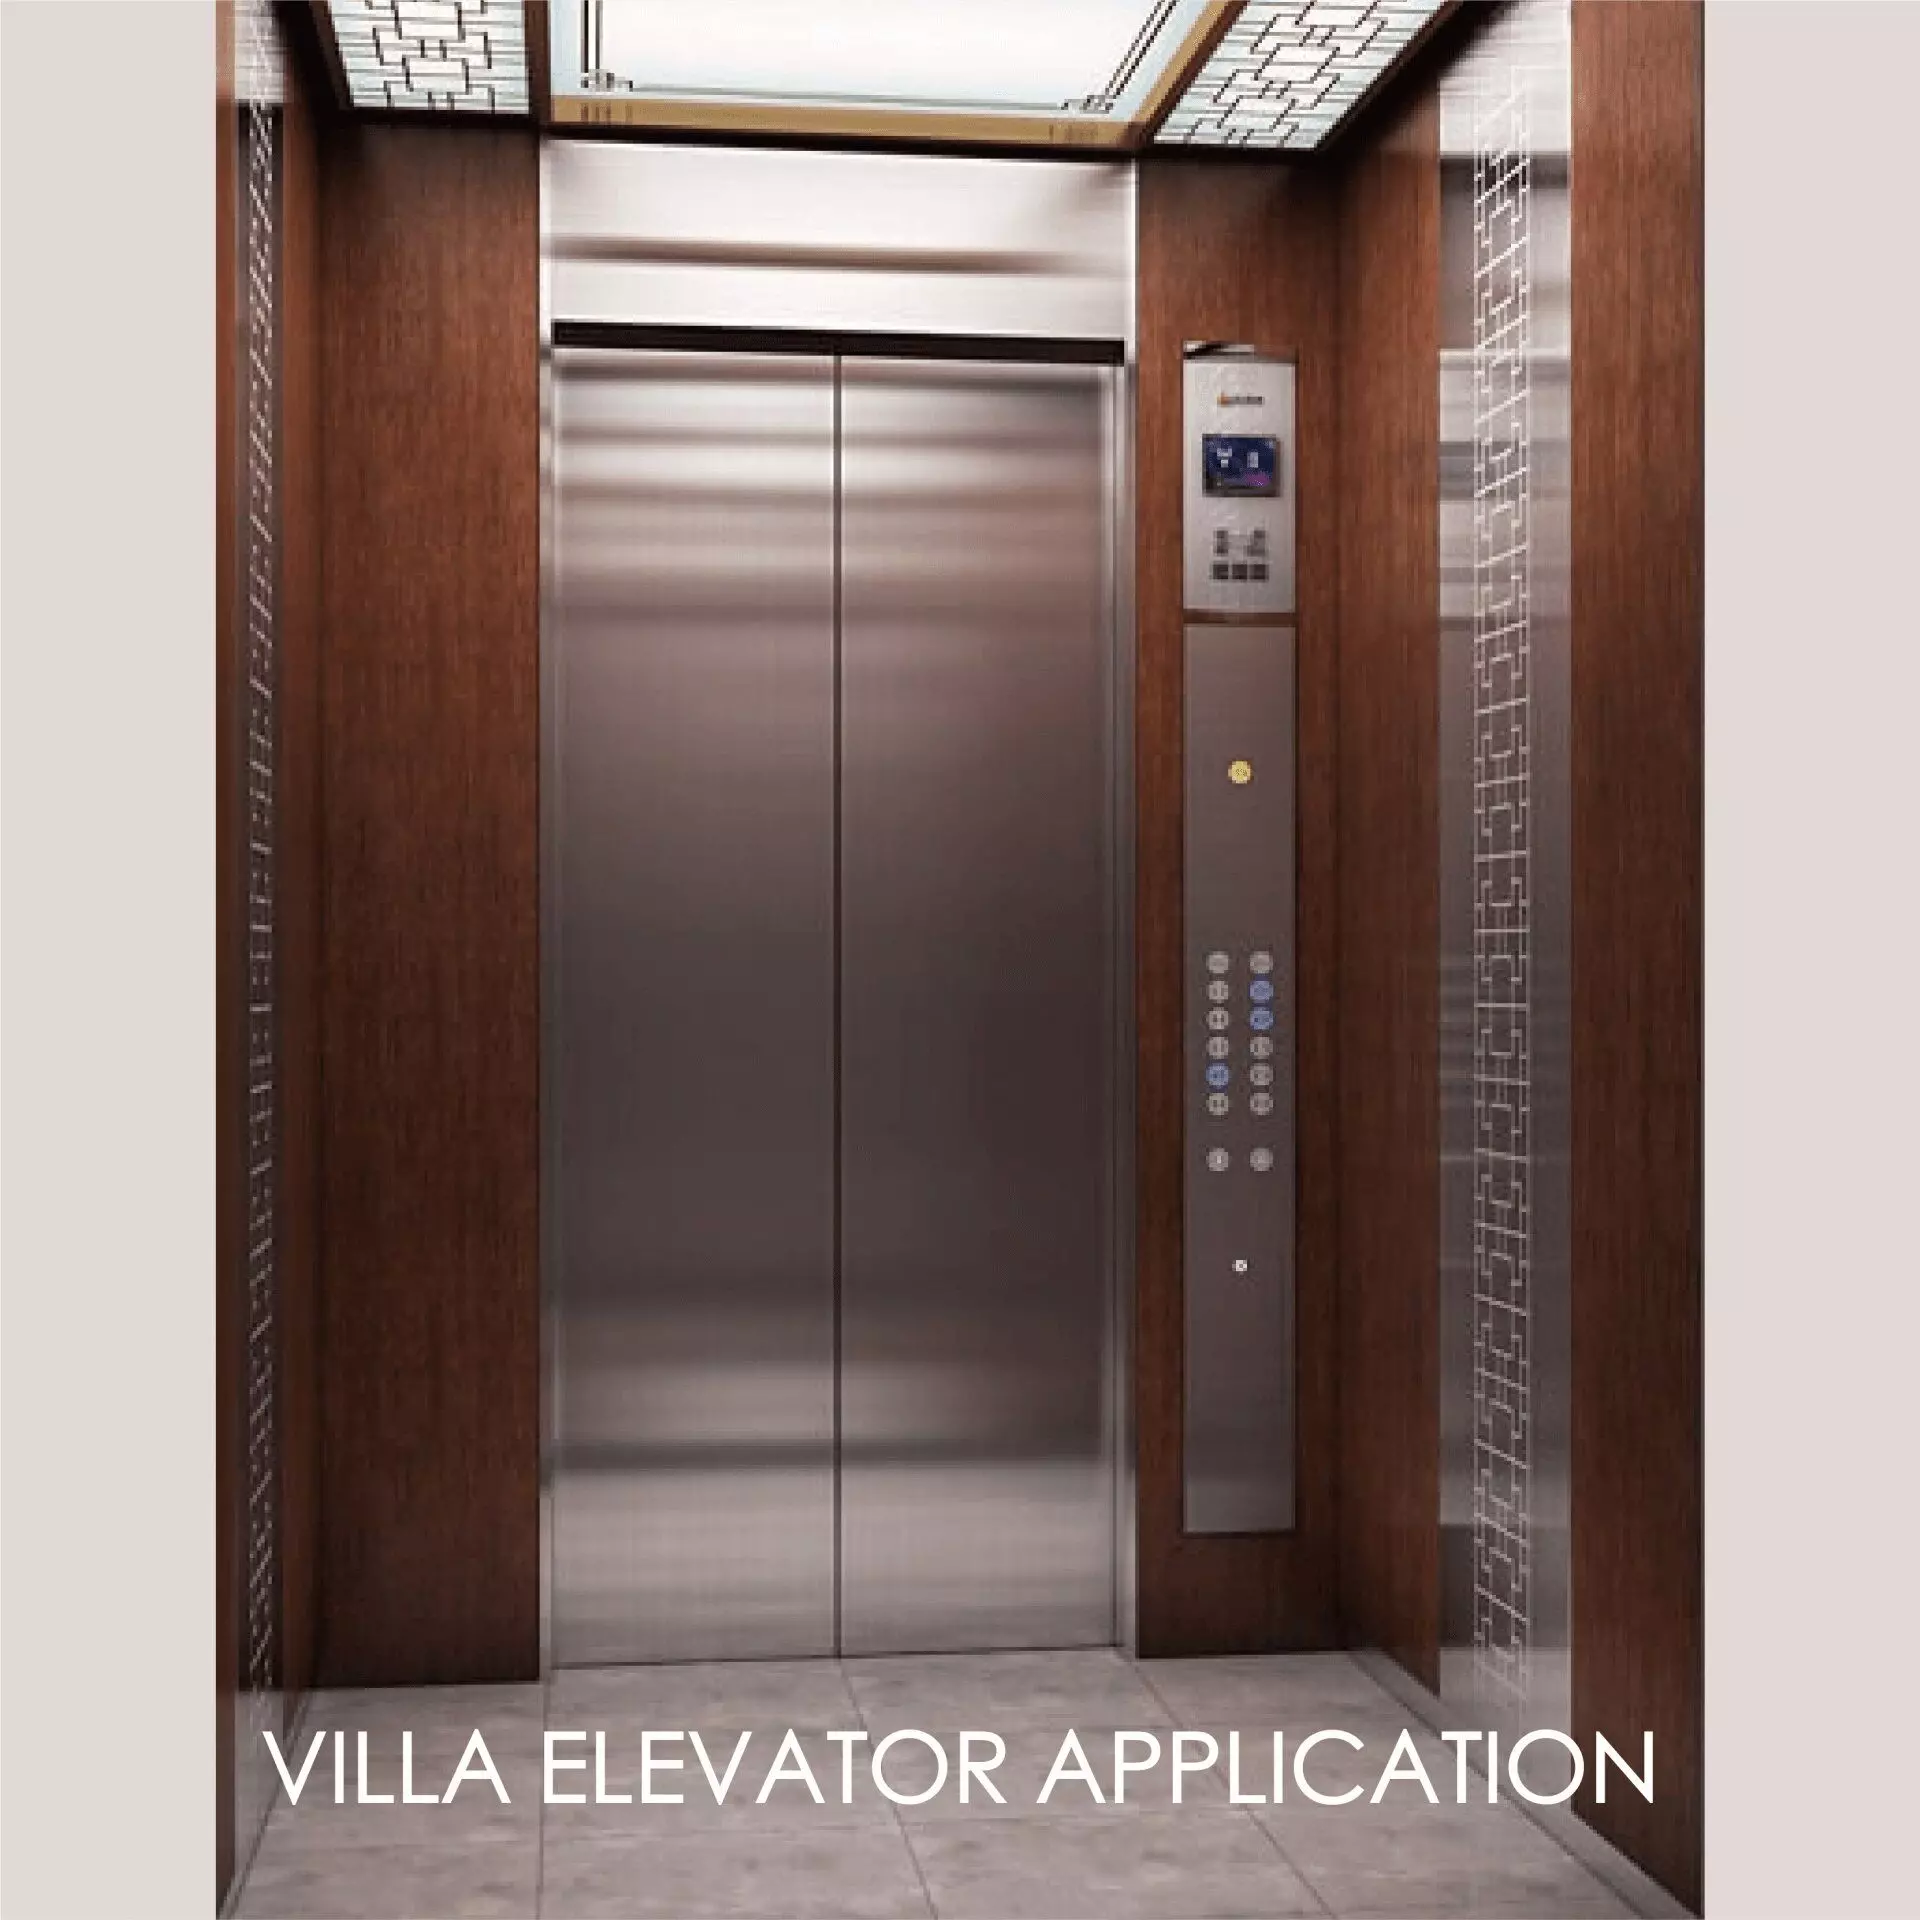 Menggunakan logam laminasi untuk mendekorasi panel pintu dan ruang interior lift dapat menciptakan estetika dan daya tahan.